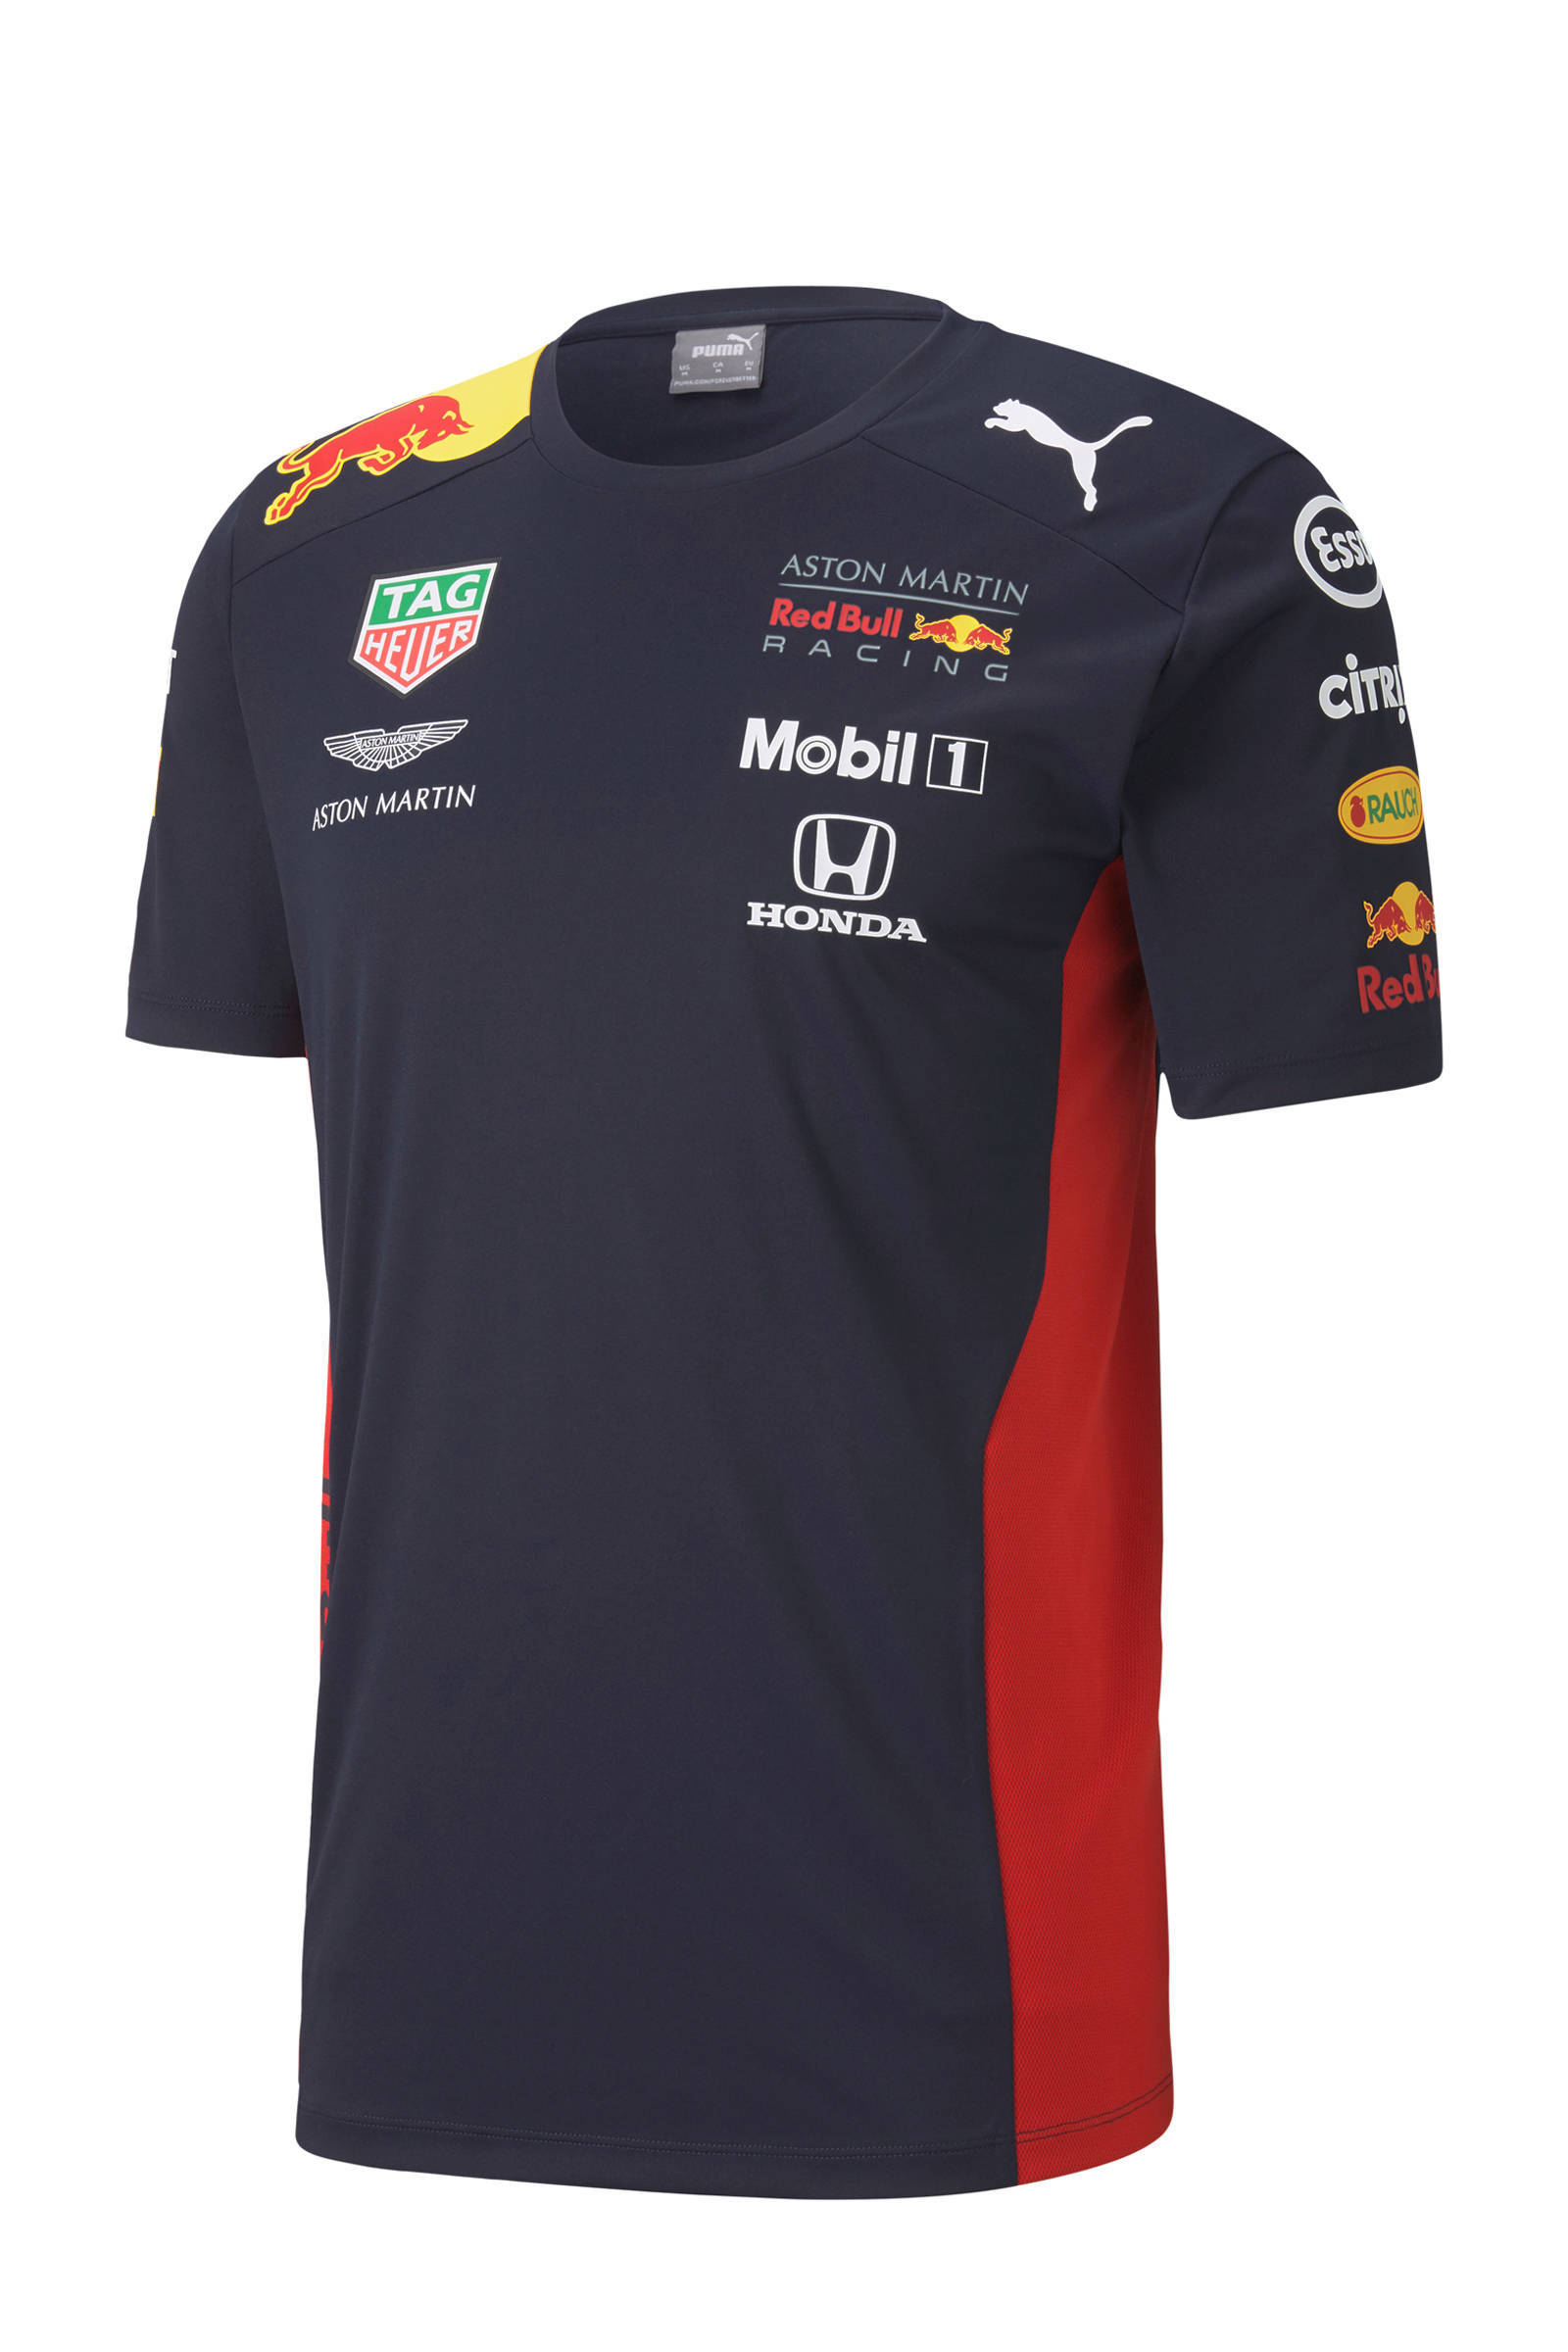 Puma Red Bull Racing T-shirt 